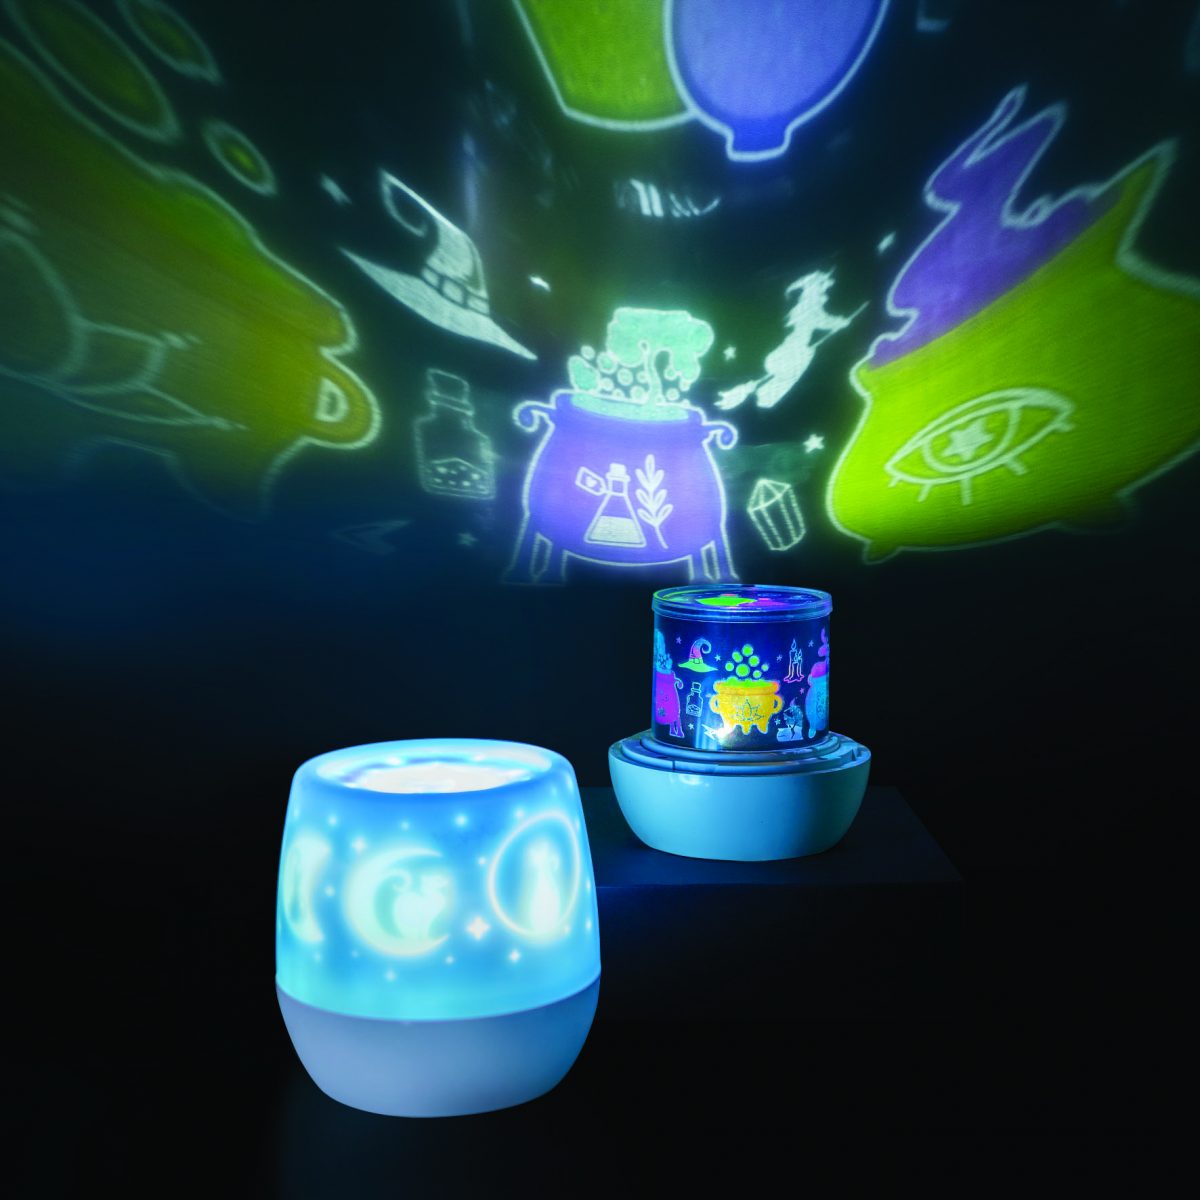 Lumi-Go-Round Enchanted Rotating Projector Light